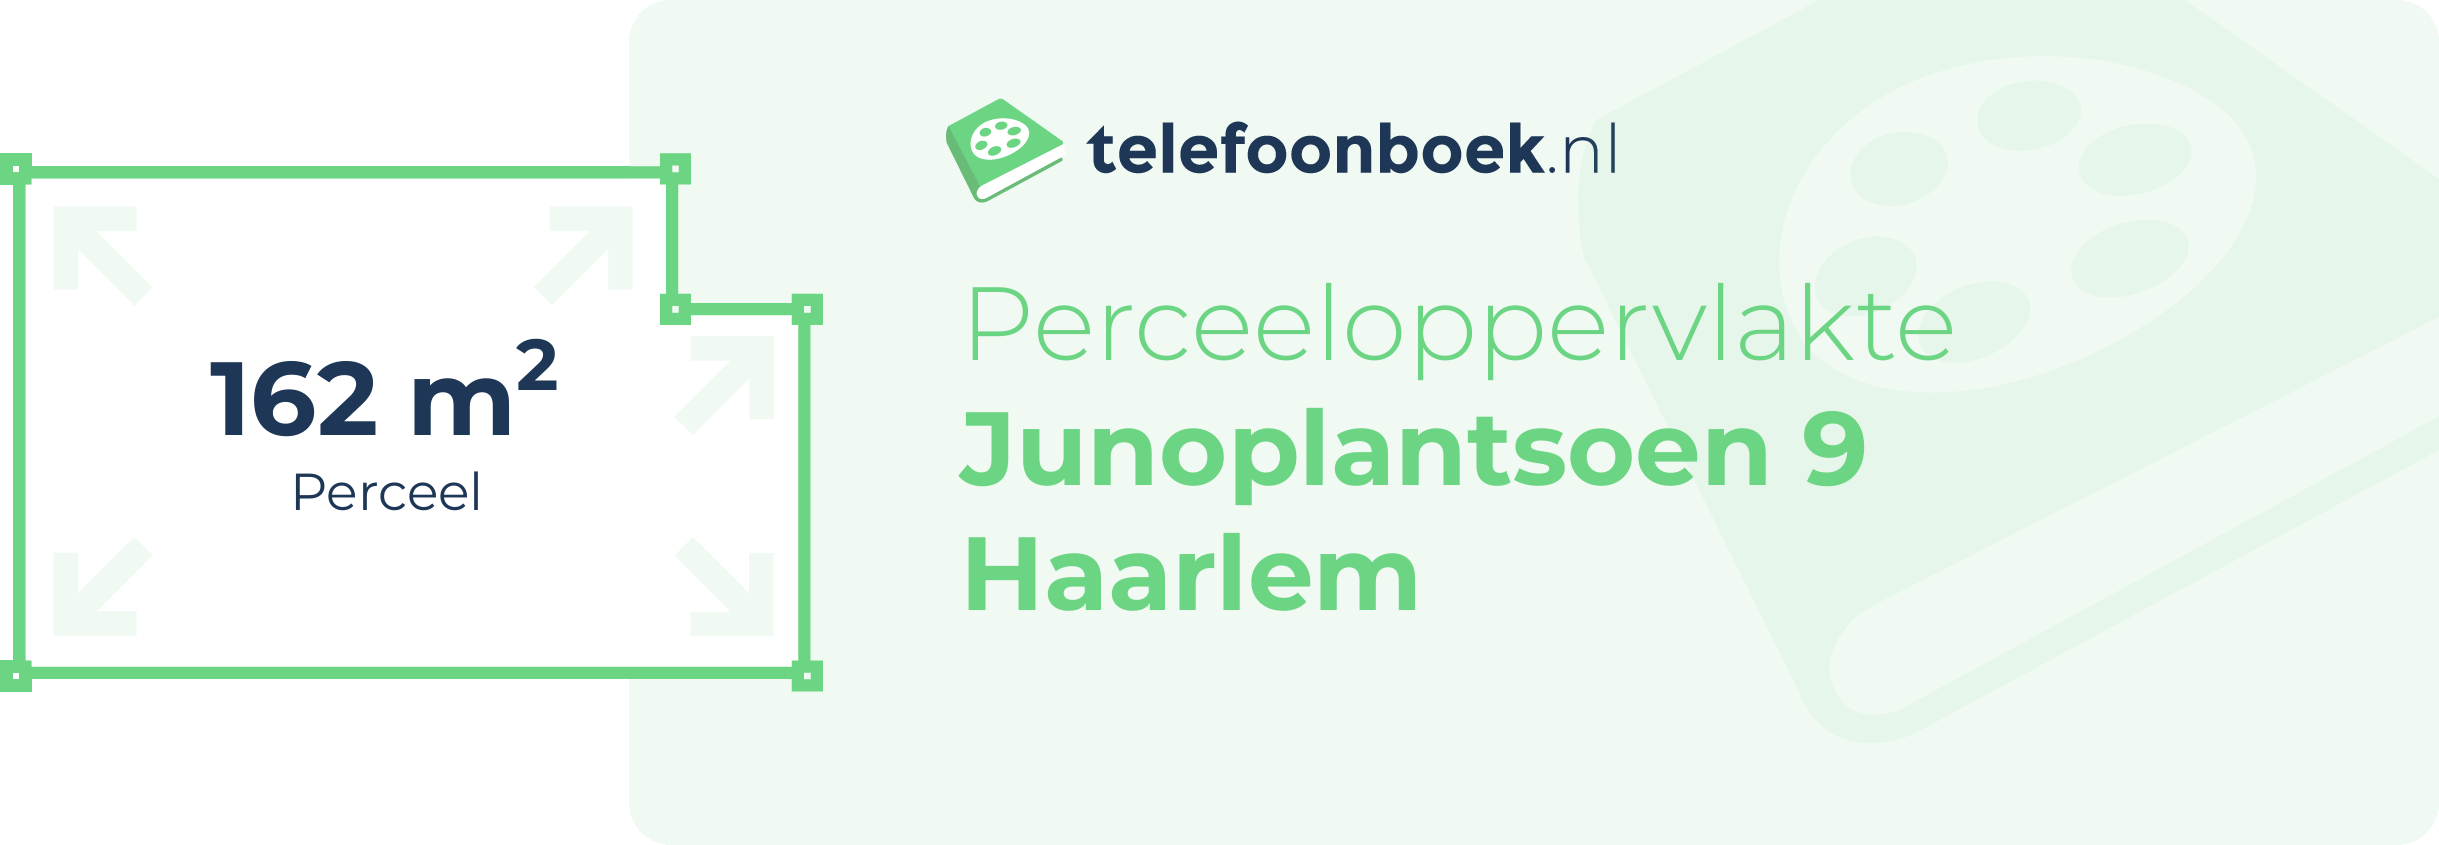 Perceeloppervlakte Junoplantsoen 9 Haarlem